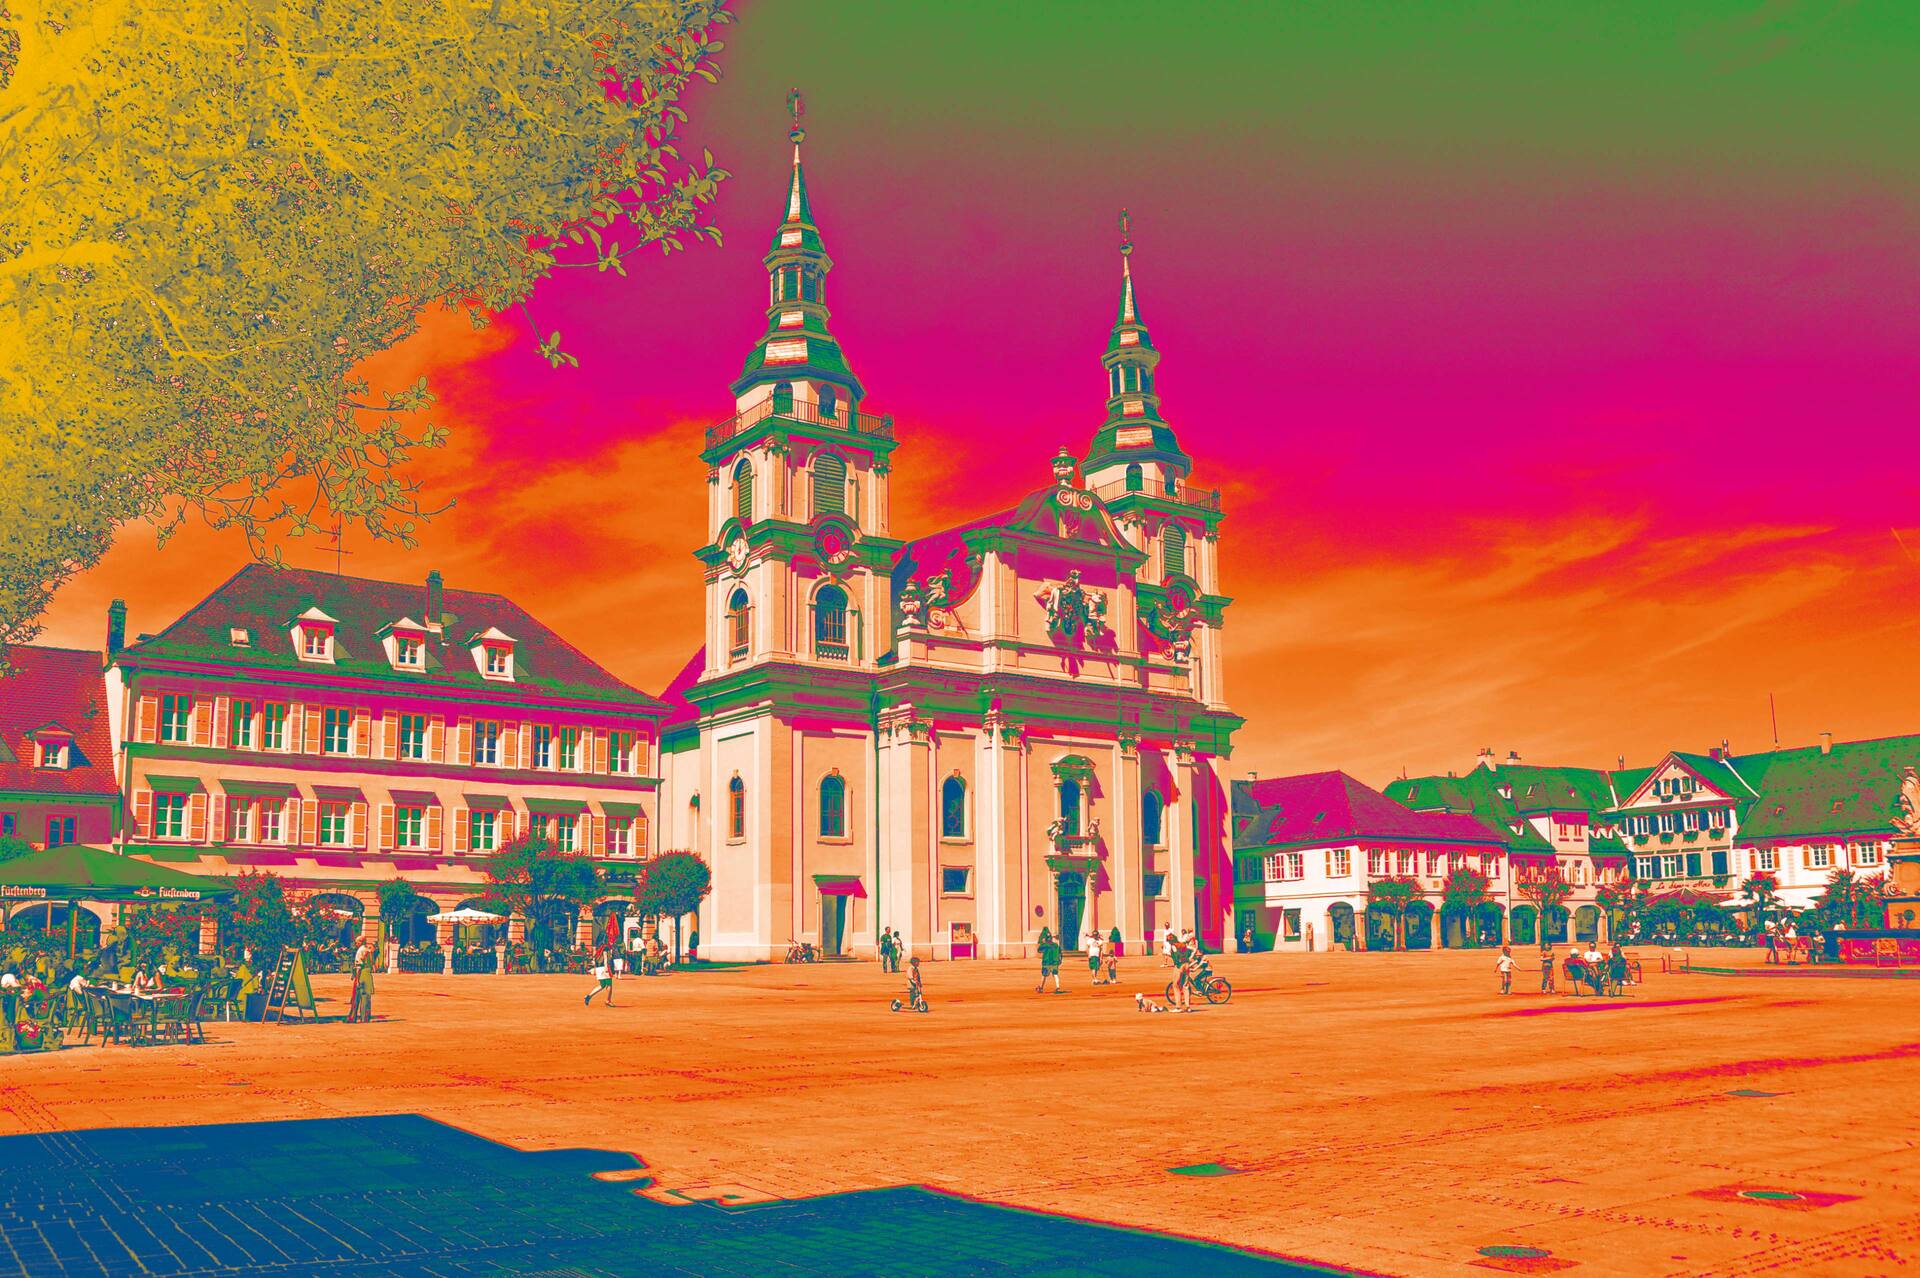 Schlossfestspiele Ludwigsburg